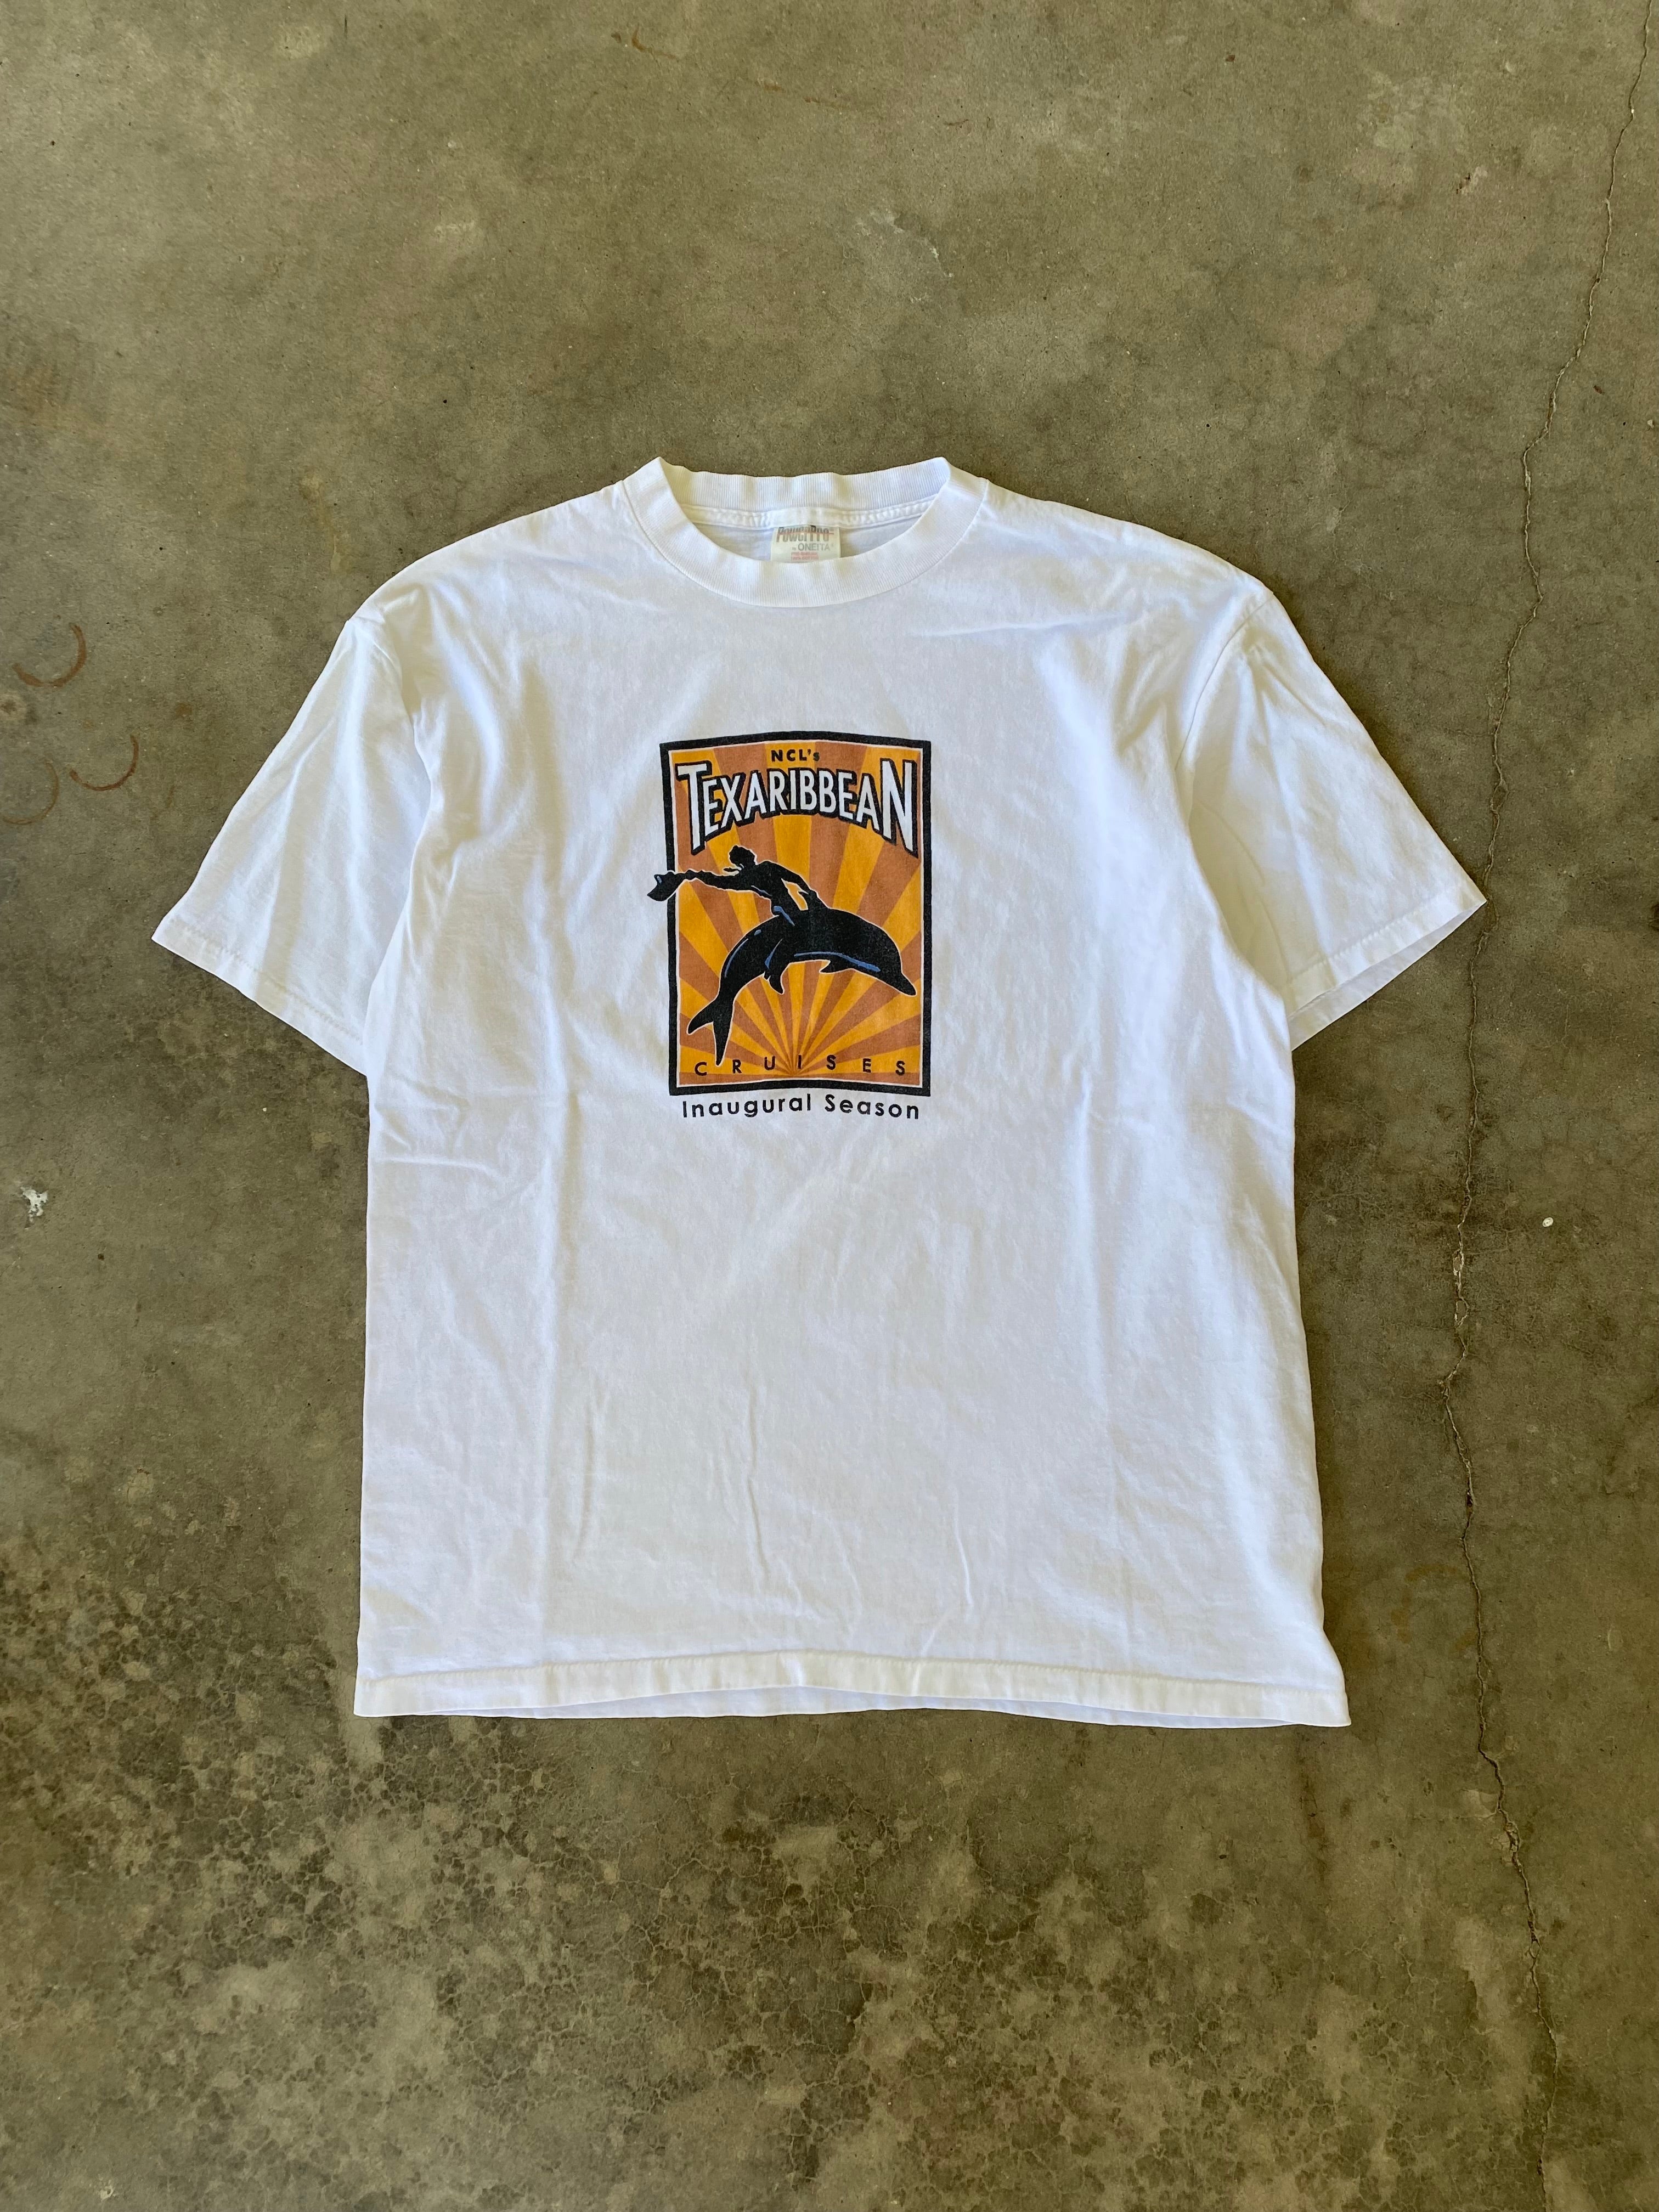 1990s NCL's Texaribbean T-Shirt (L)